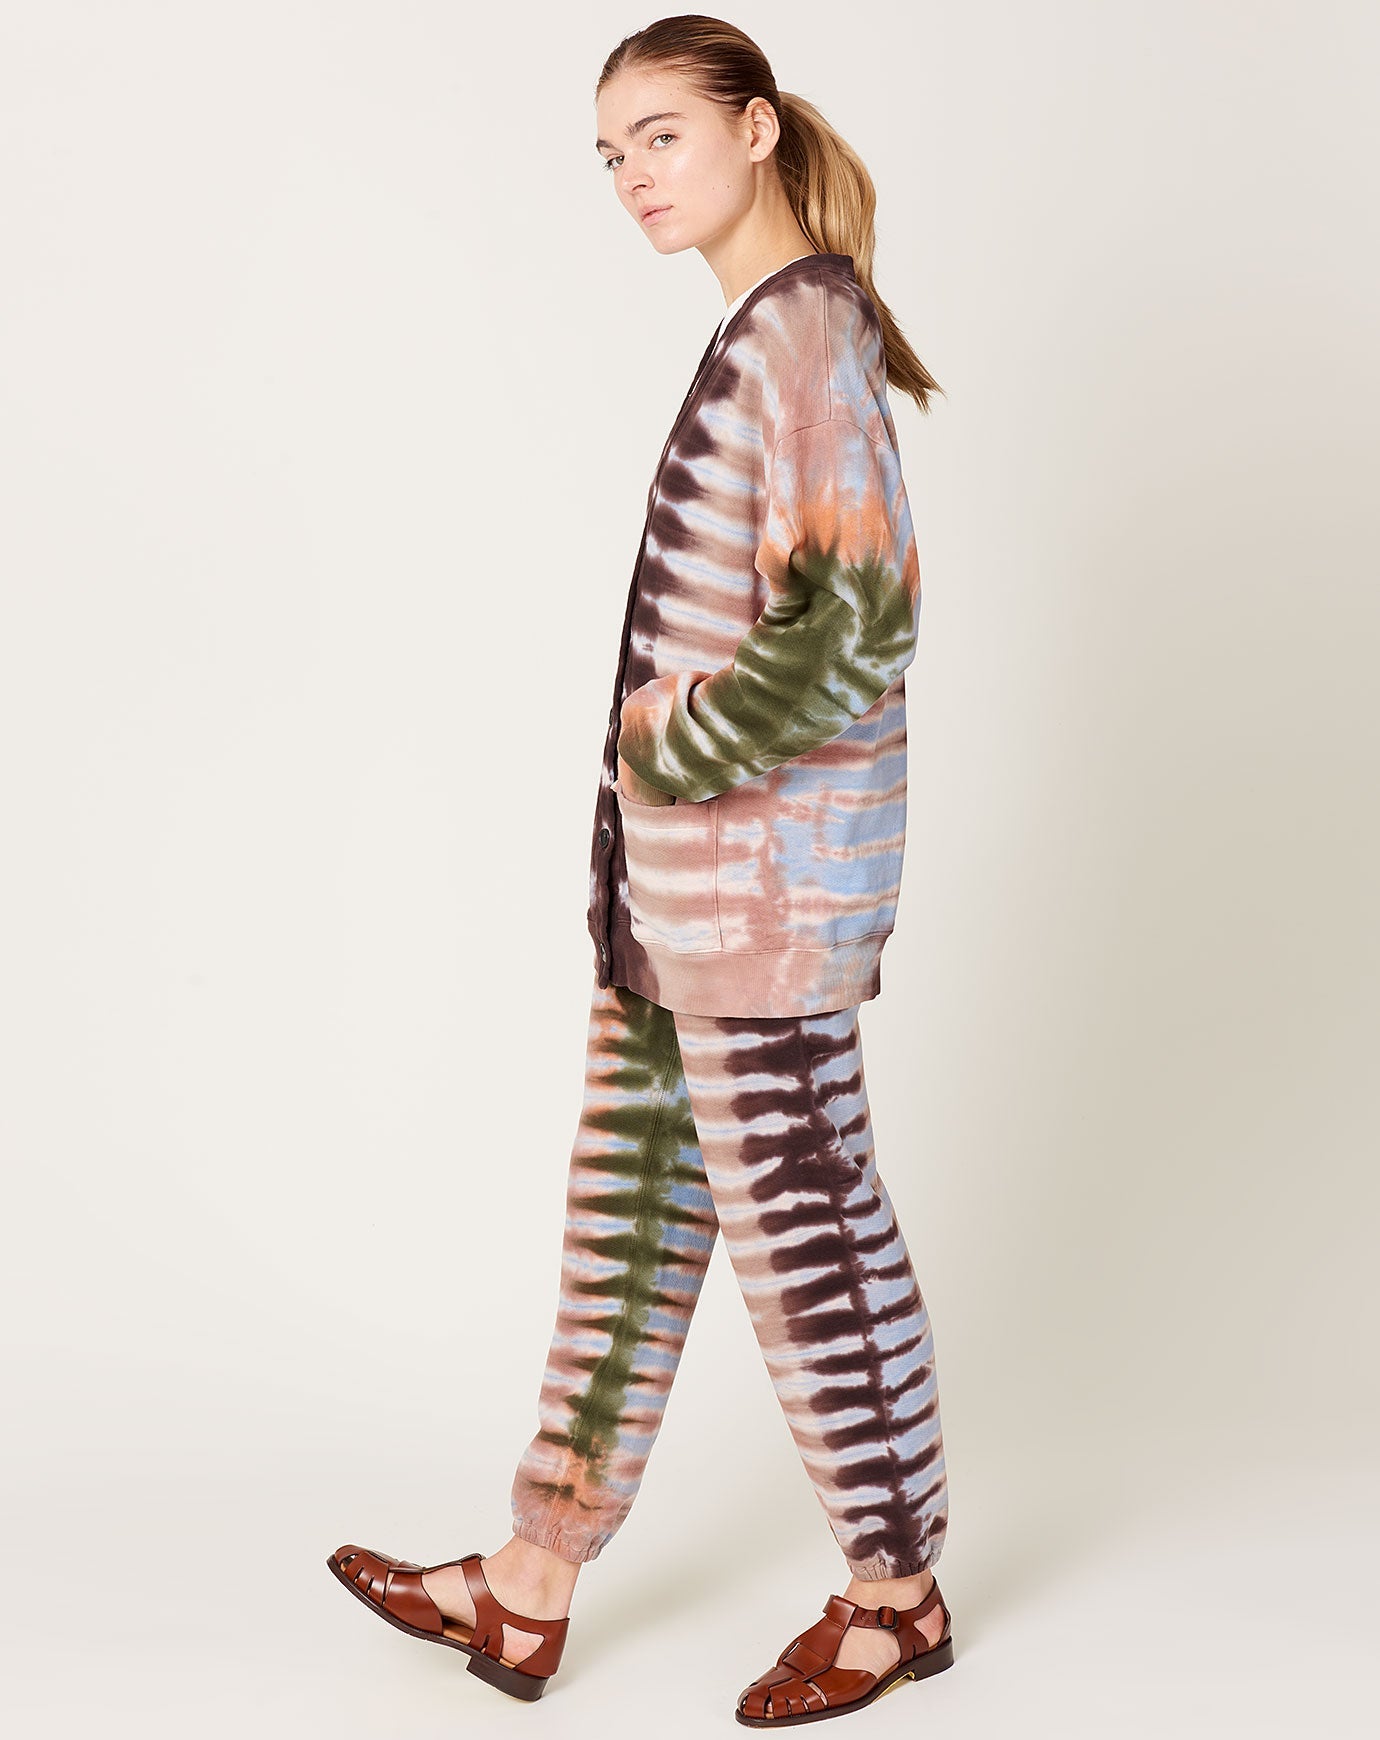 Raquel Allegra Cardigan in Vertical Landscape Tie Dye